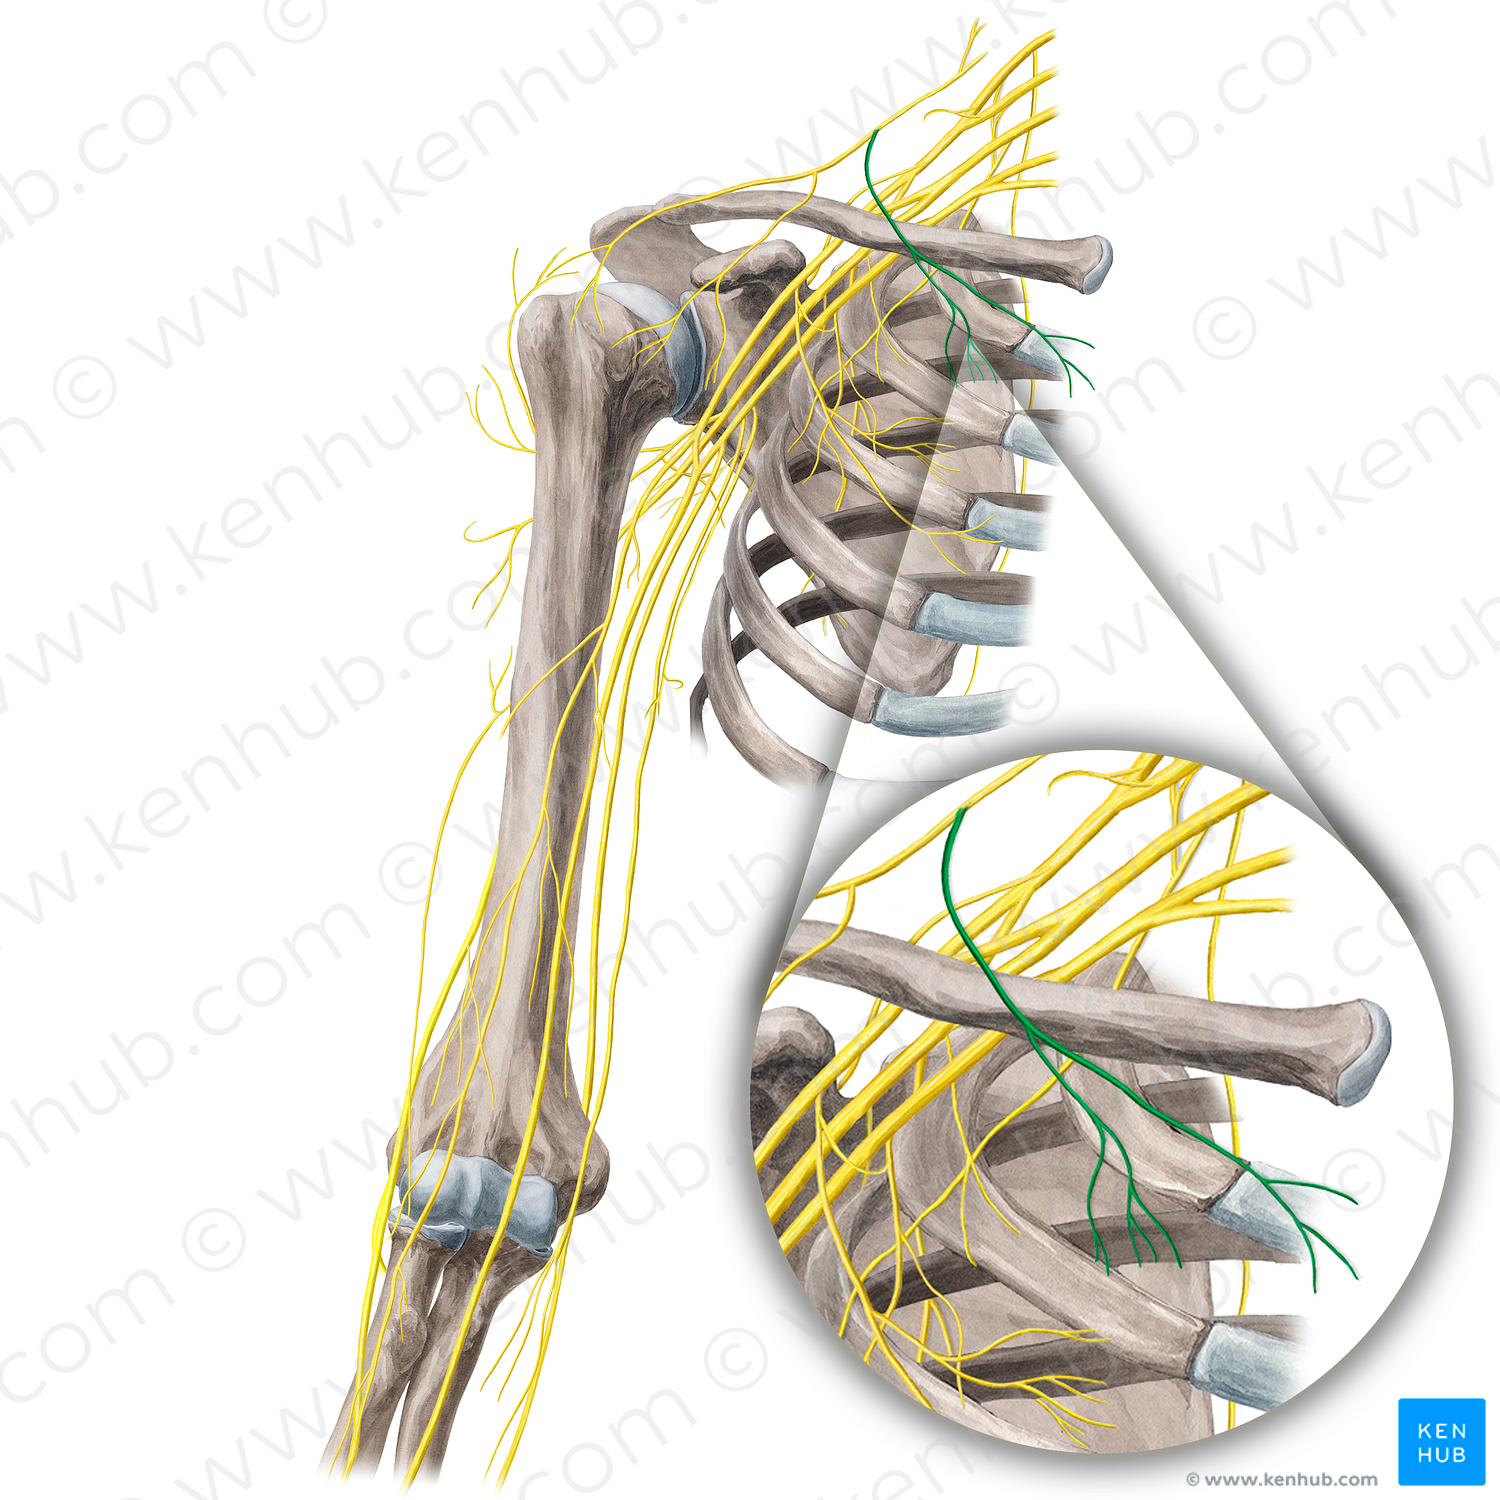 Medial supraclavicular nerves (#21680)